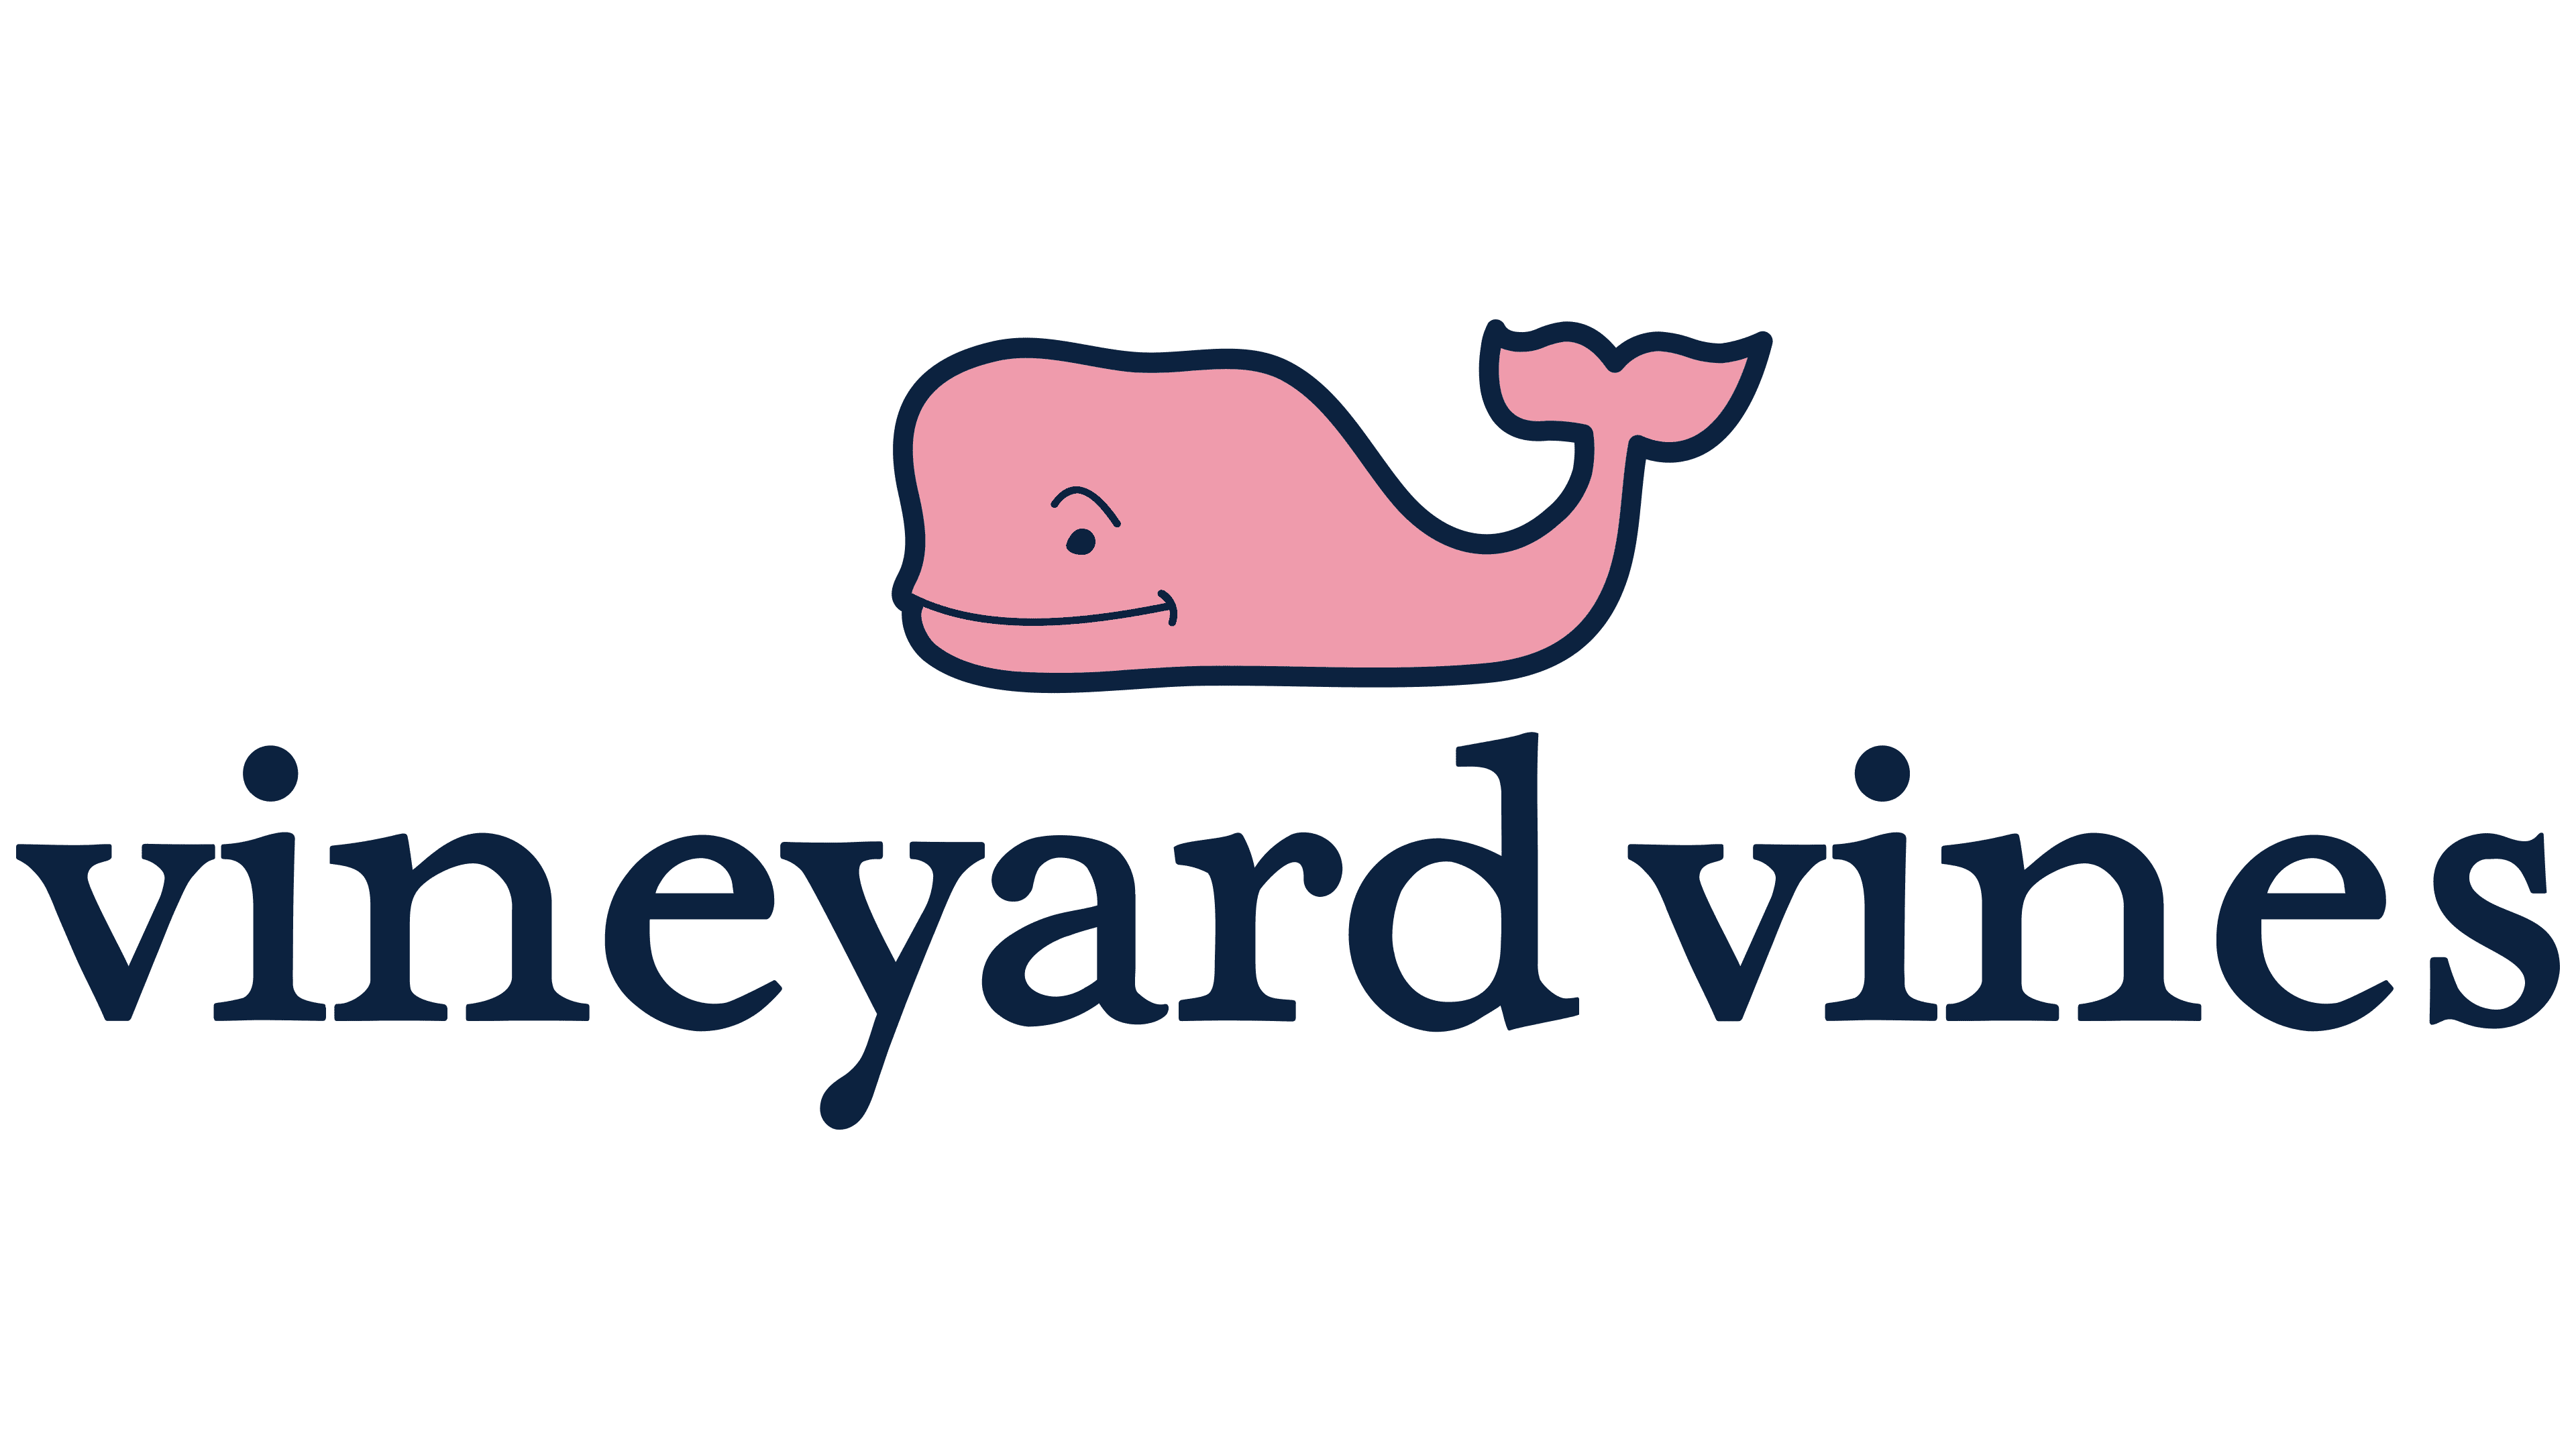 Meaning Vineyard Vines logo and symbol